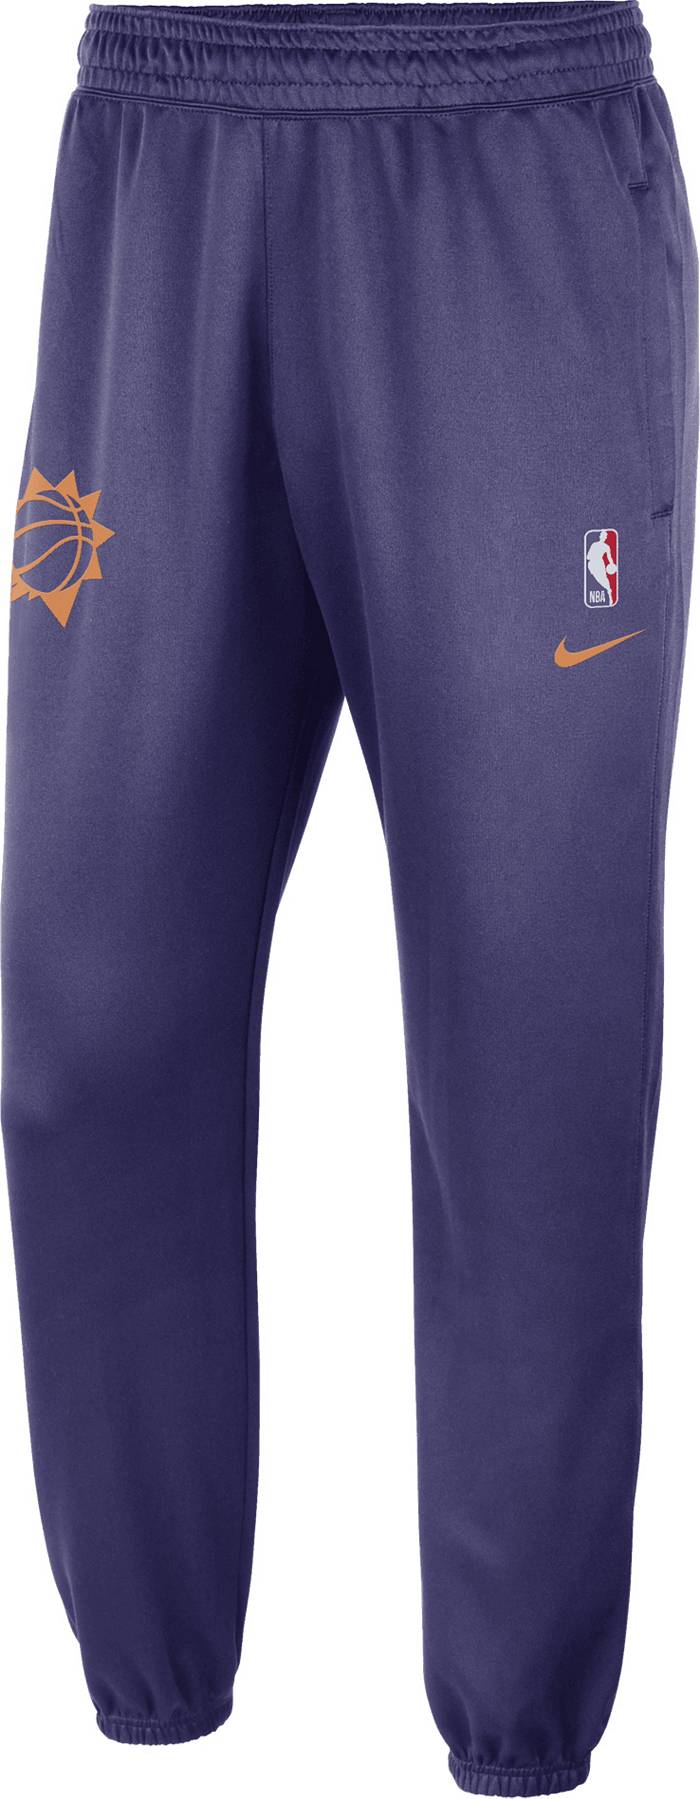 Nike Thermoflex Showtime Long Pants Black